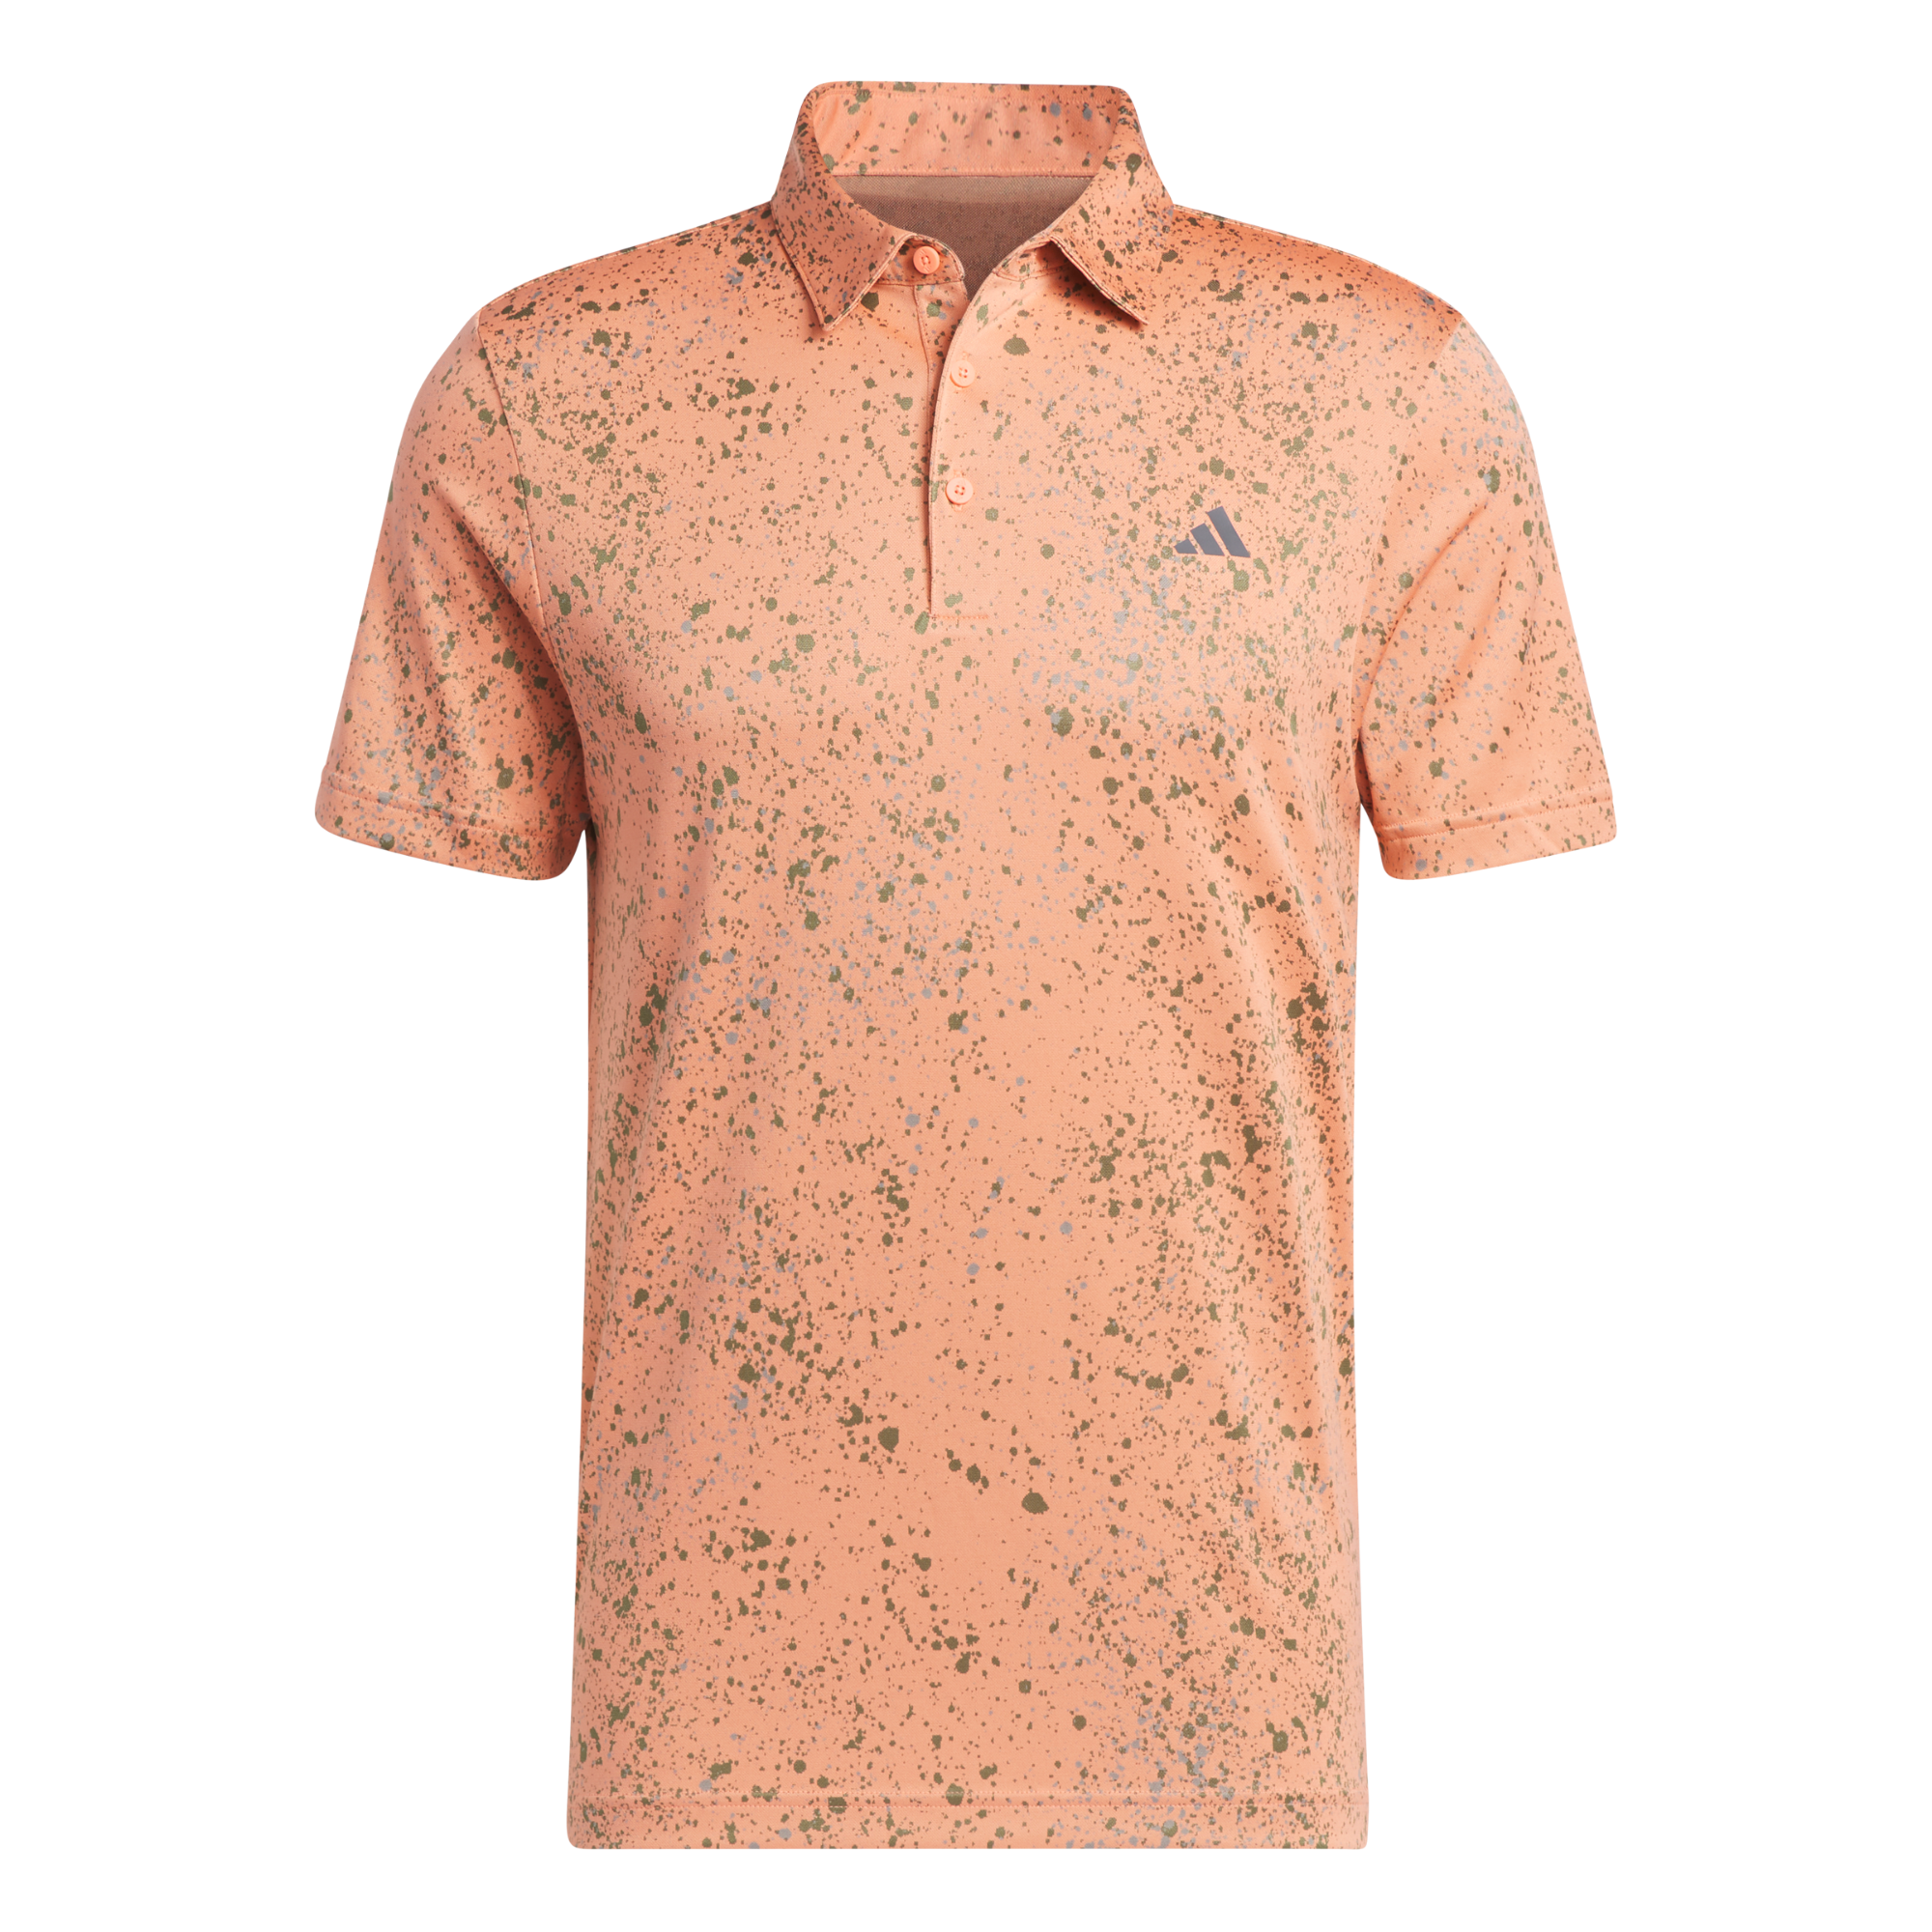 adidas Men's Jacquard Golf Polo Shirt